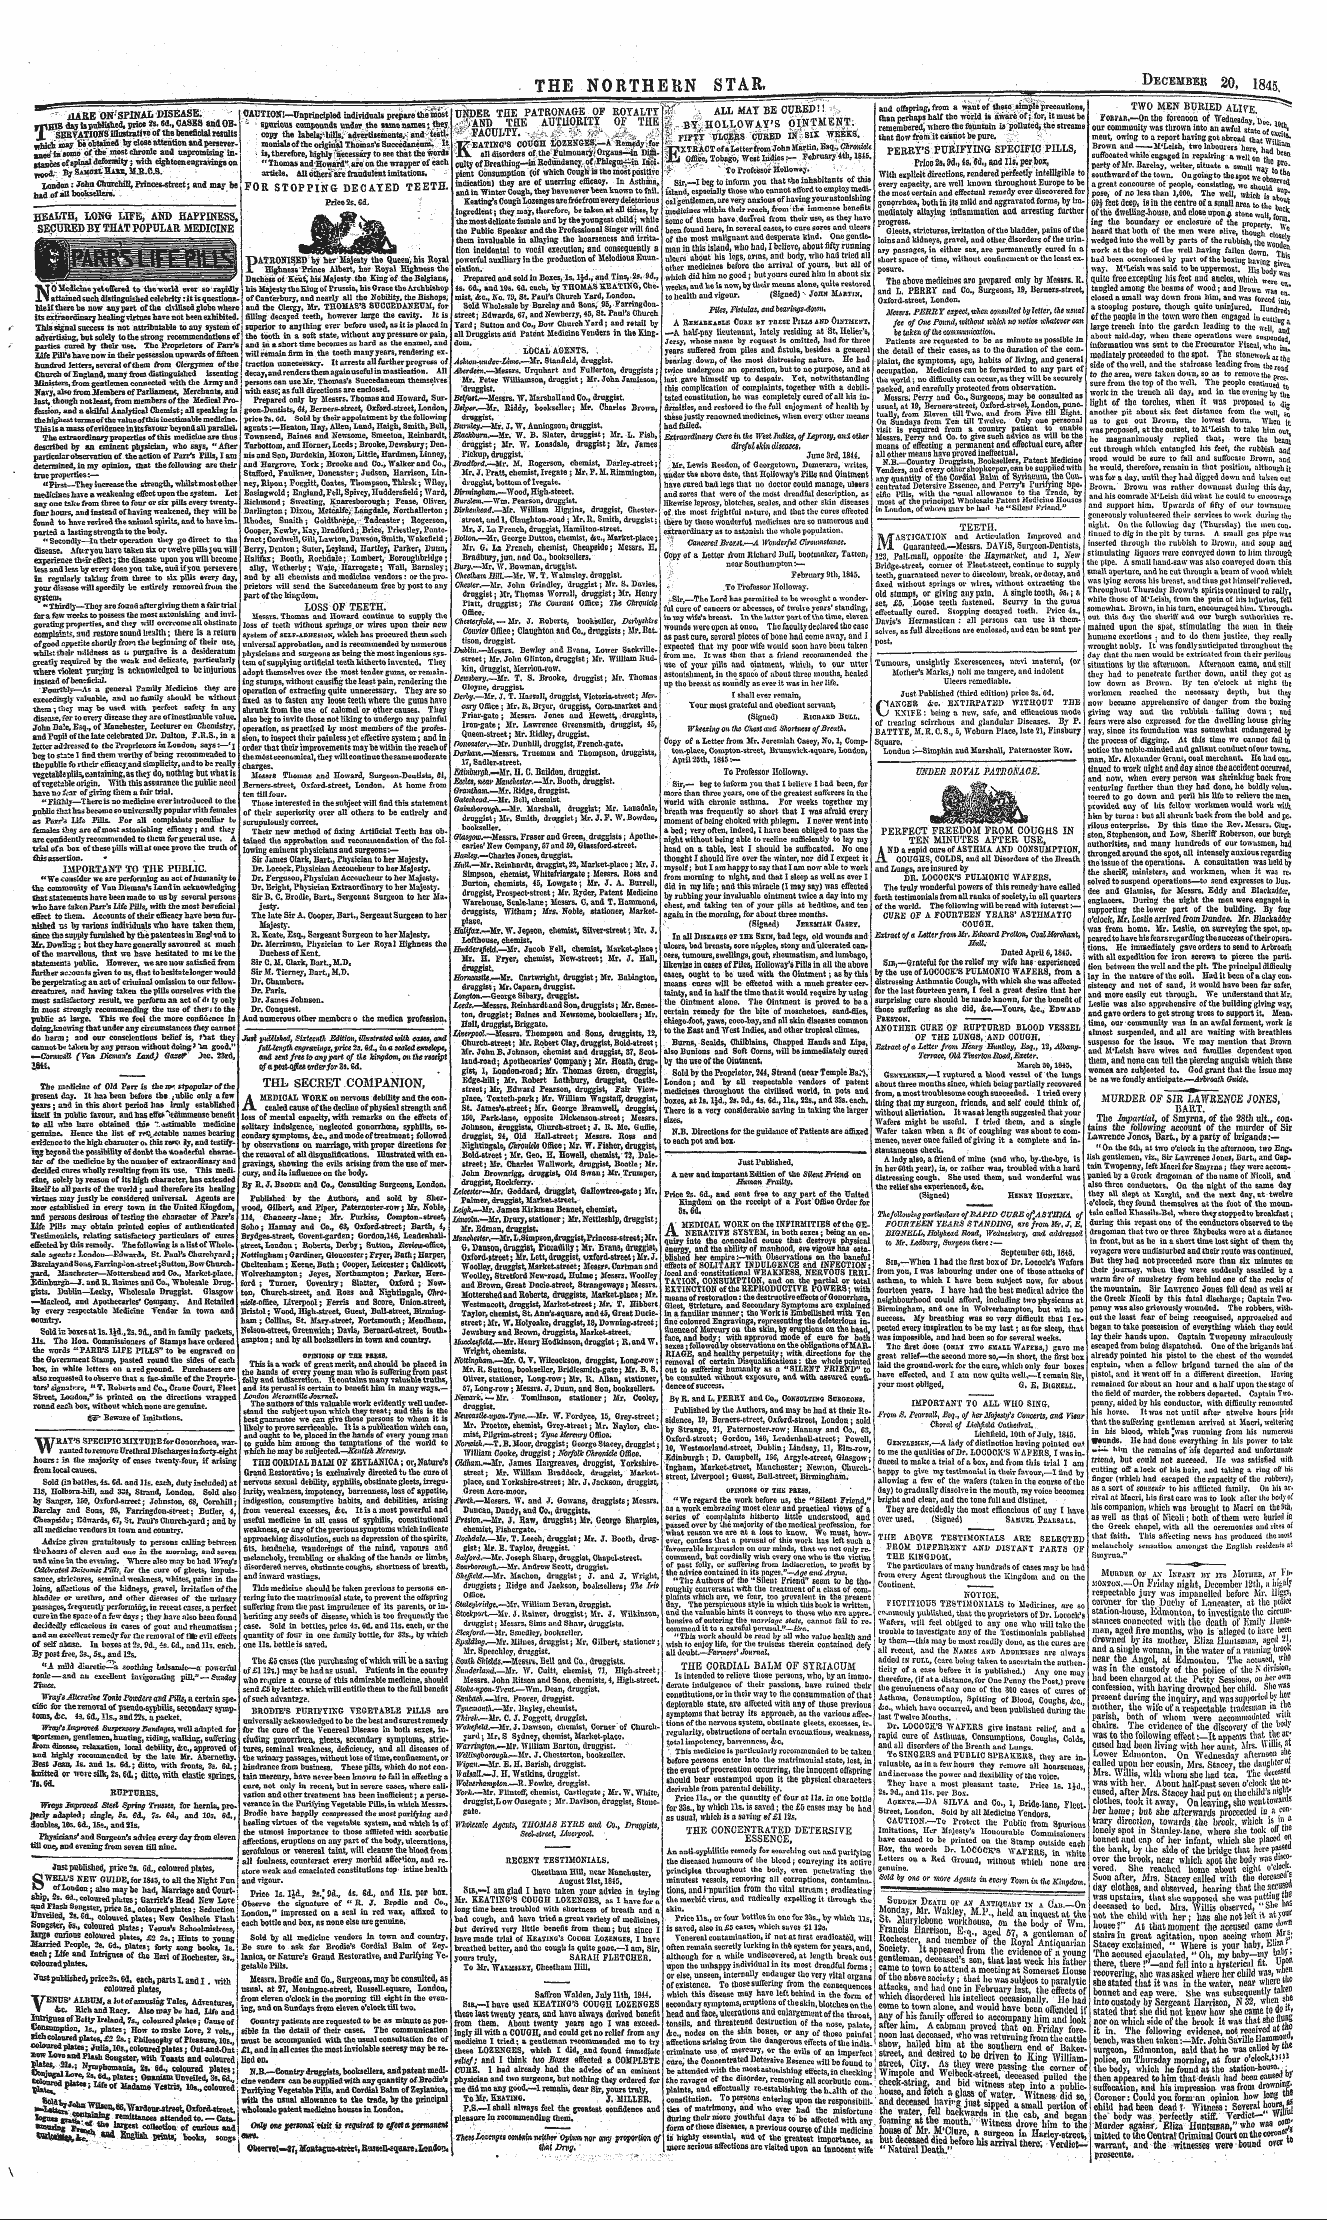 Northern Star (1837-1852): jS F Y, 4th edition - Ad00216